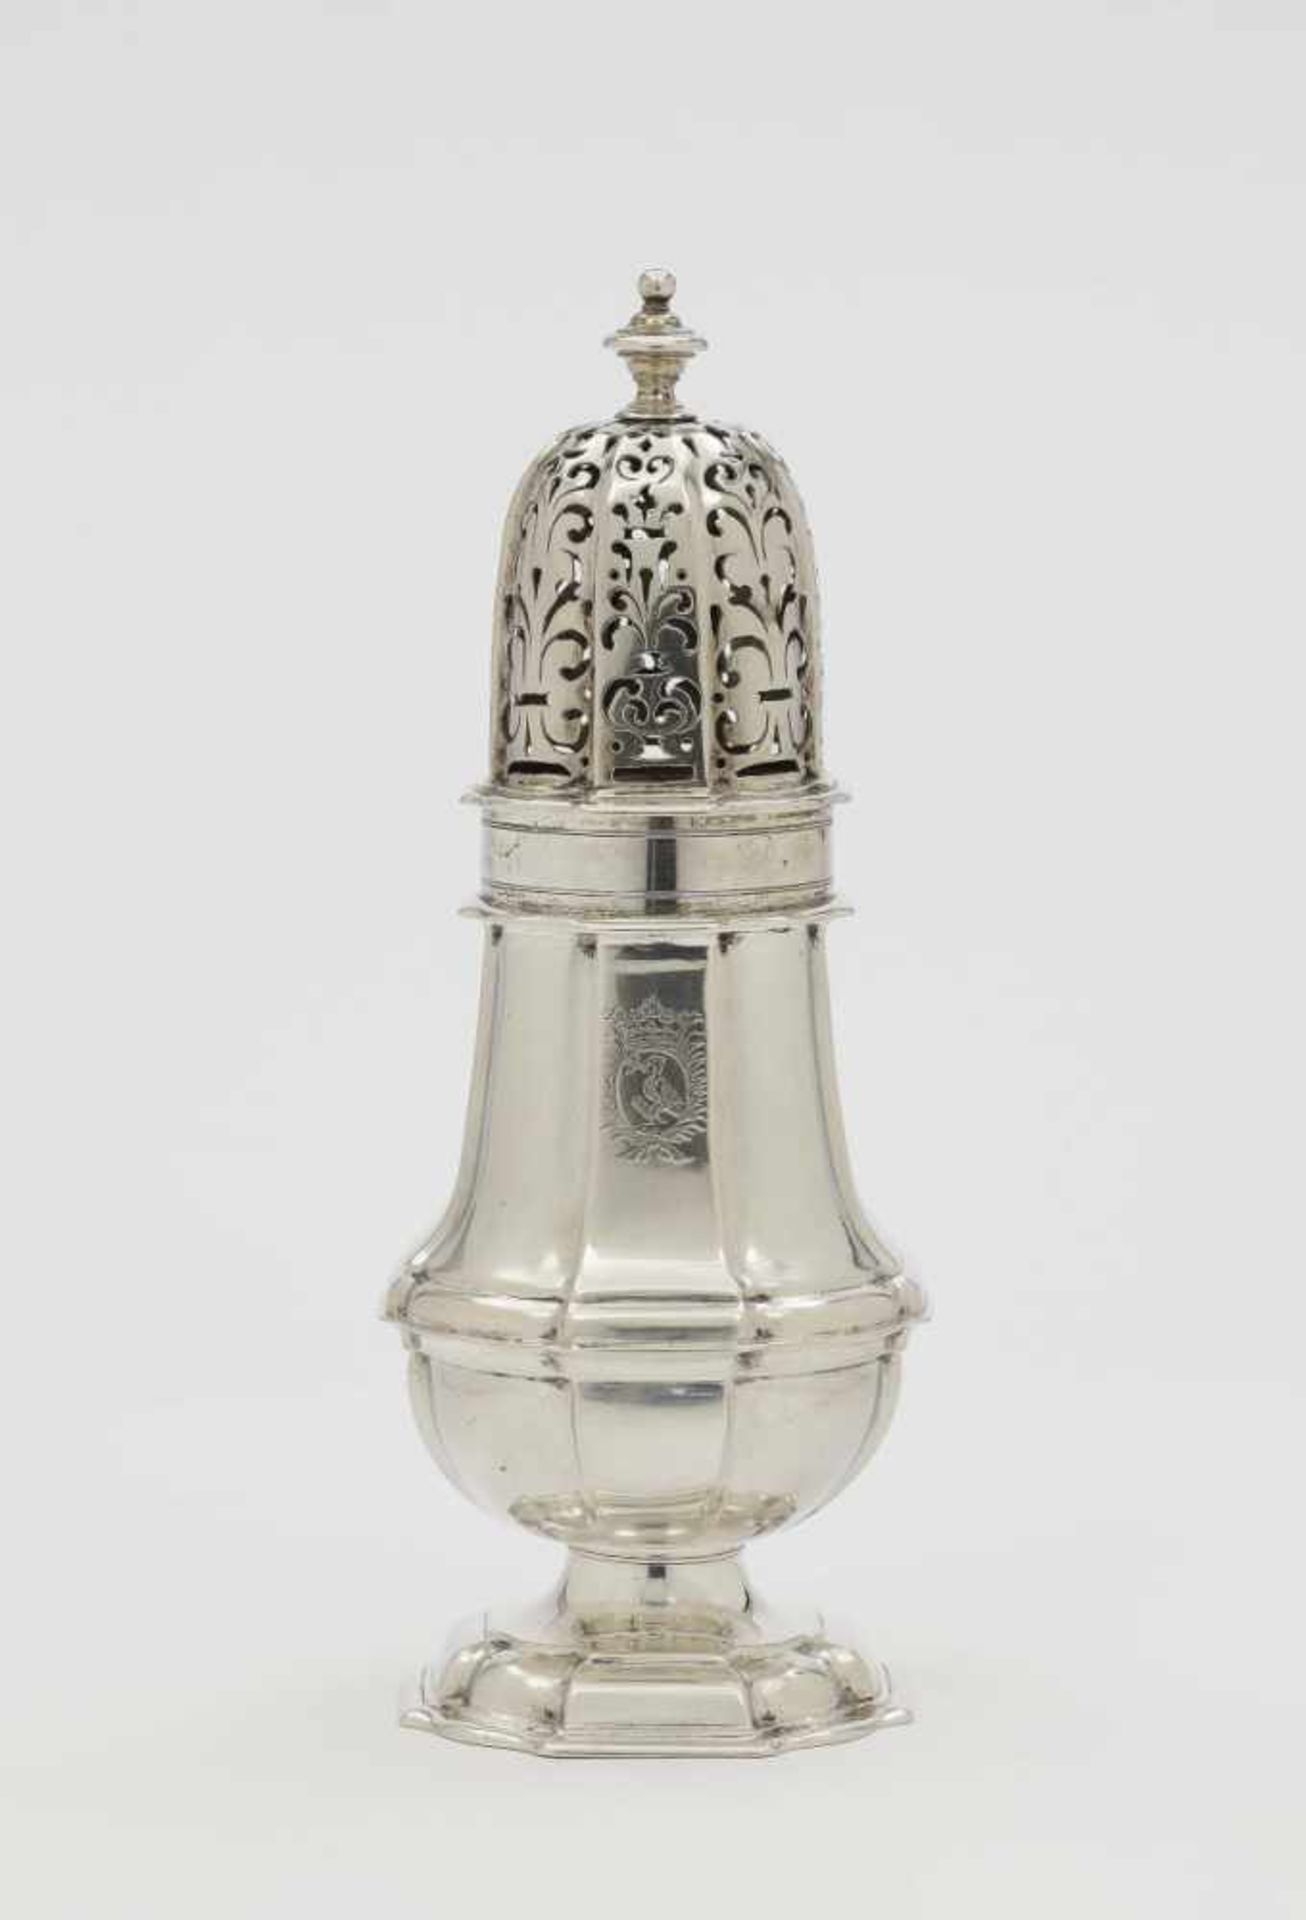 A sugar casterCelle, 1st quarter of the 18th century, Johann Christian Schmidt Silver. Crowned